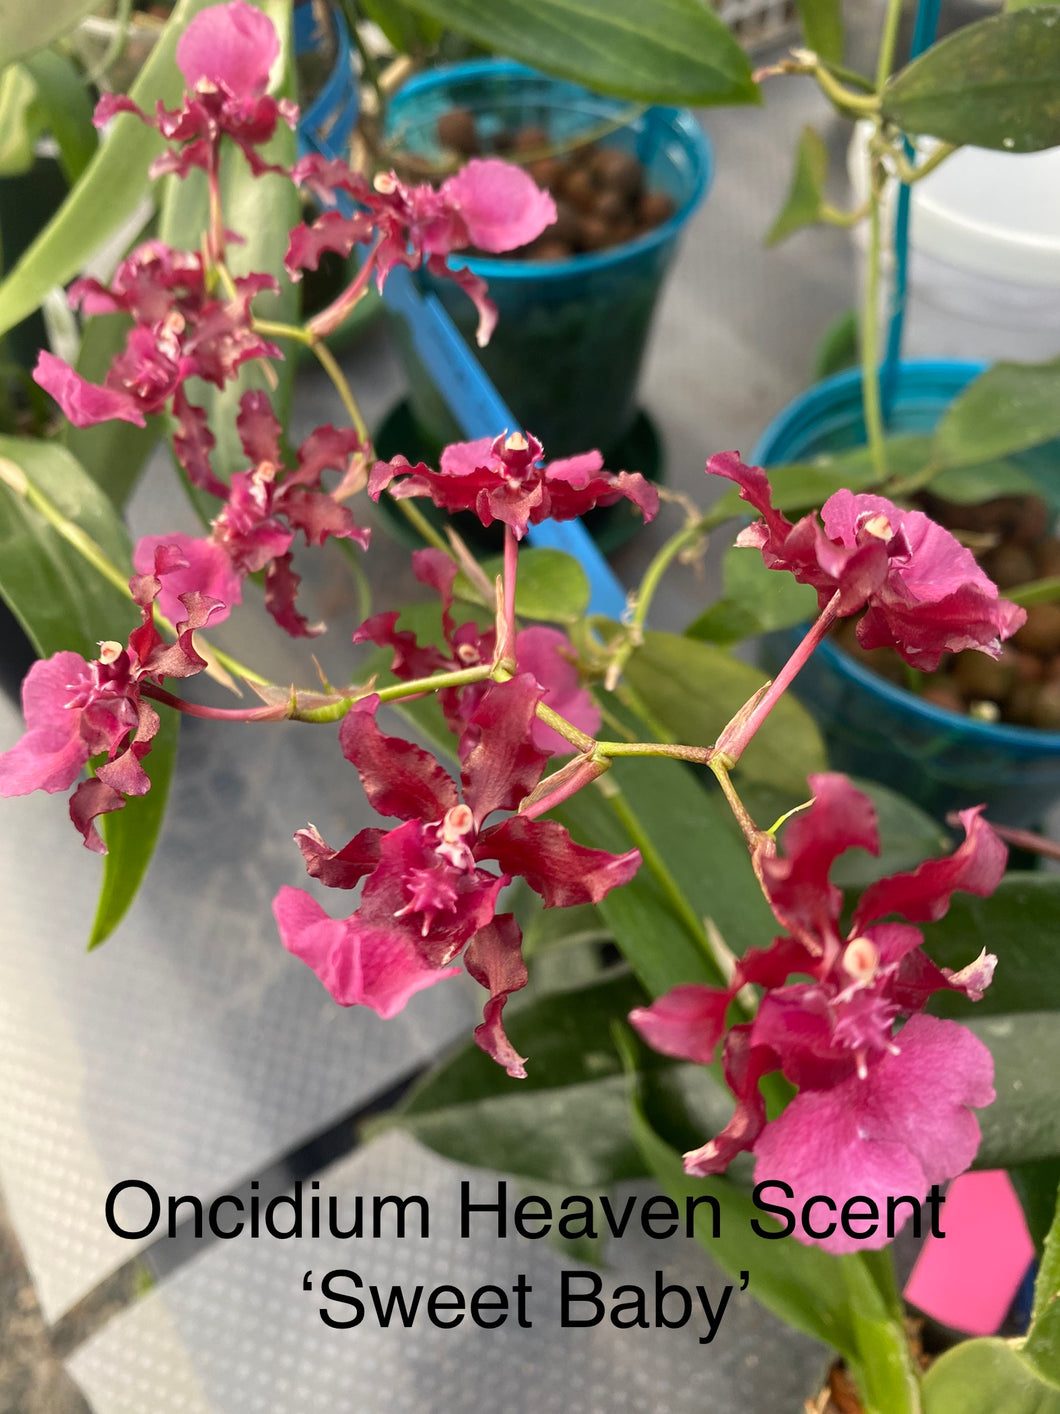 Oncidium Heaven Scent ‘Sweet Baby’ in spike